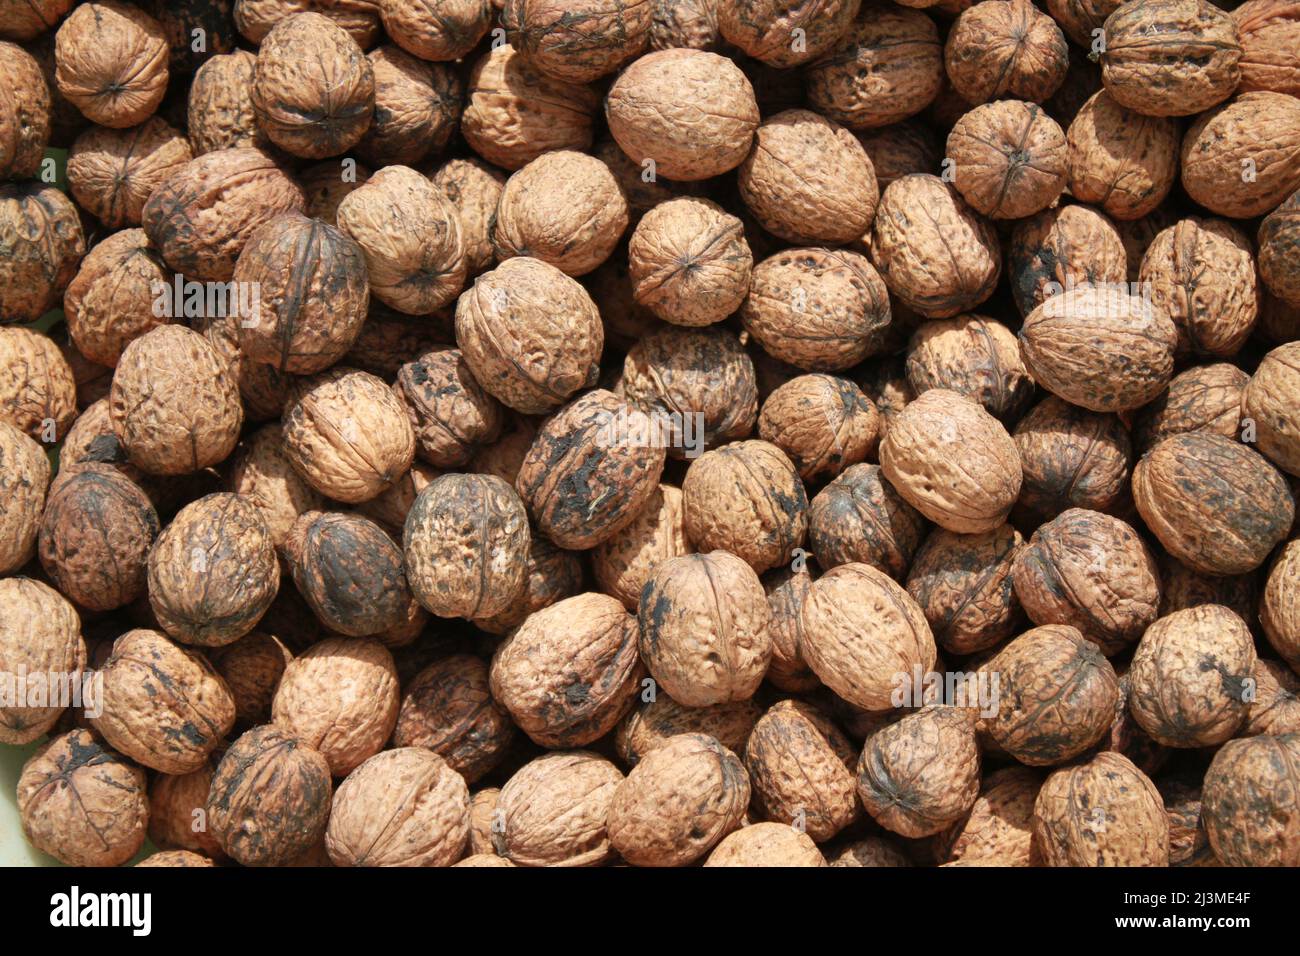 background with many ripe walnuts Stock Photo